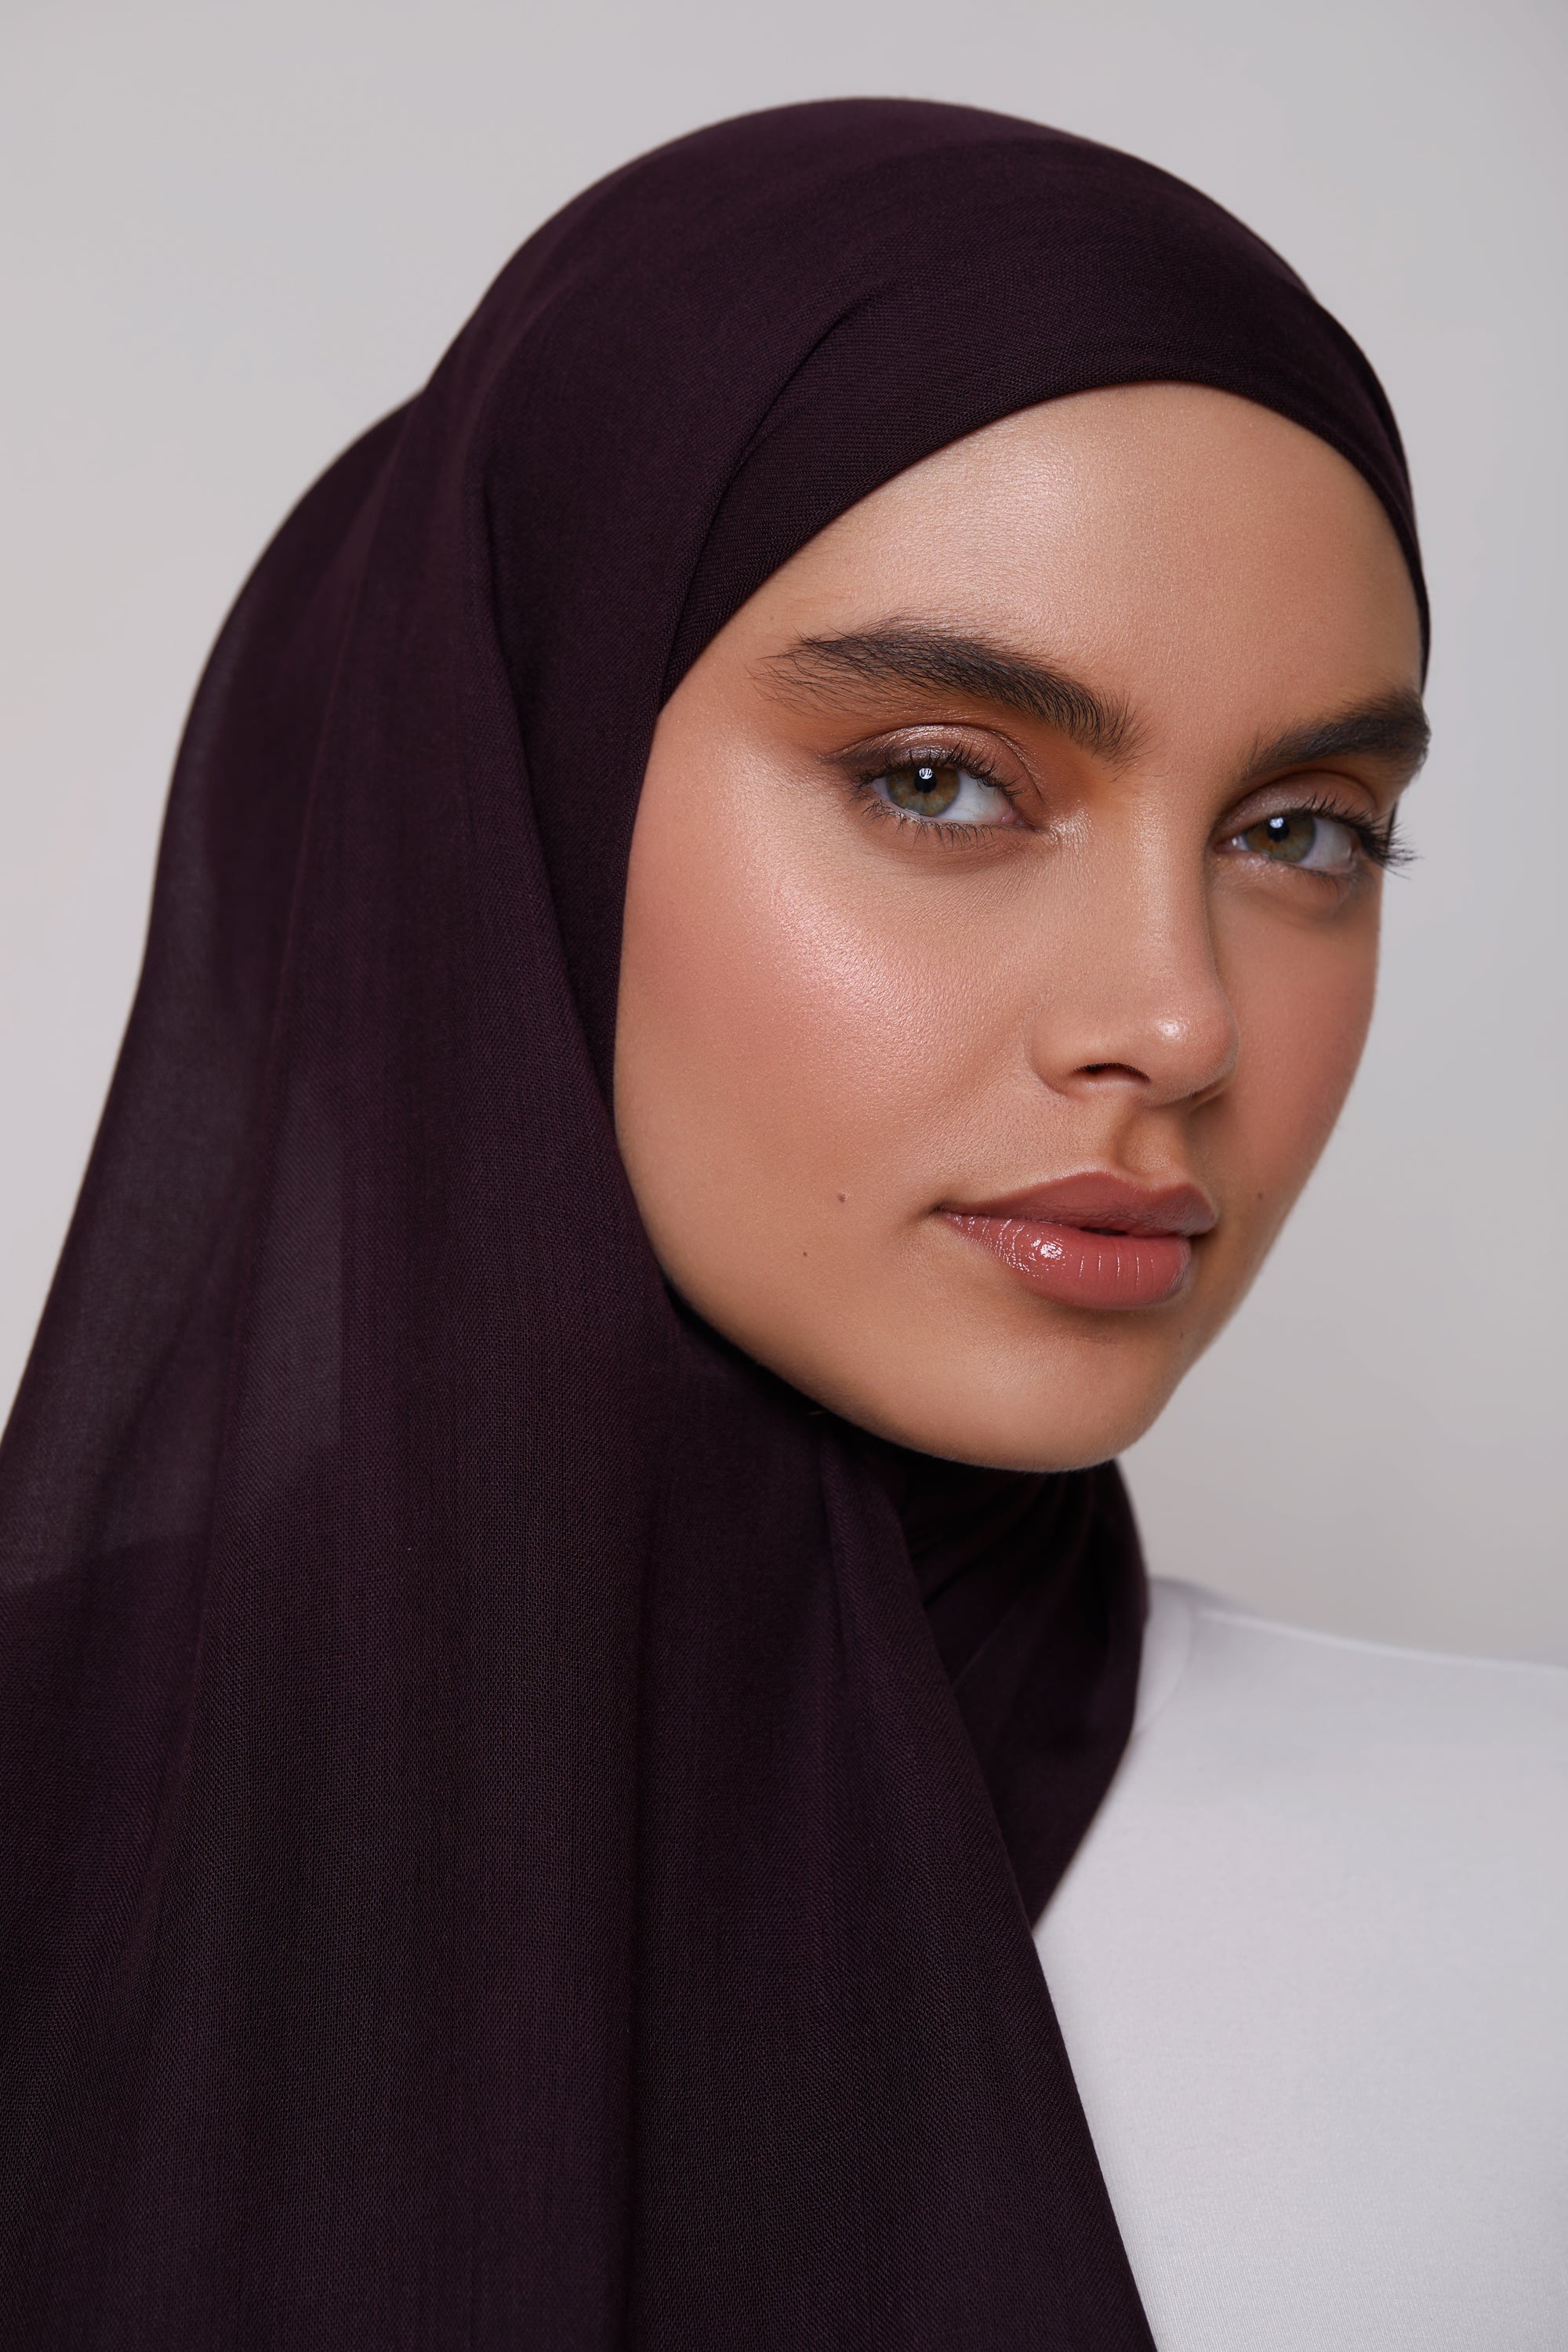 Modal Hijab - Chocolate Plum epschoolboard 